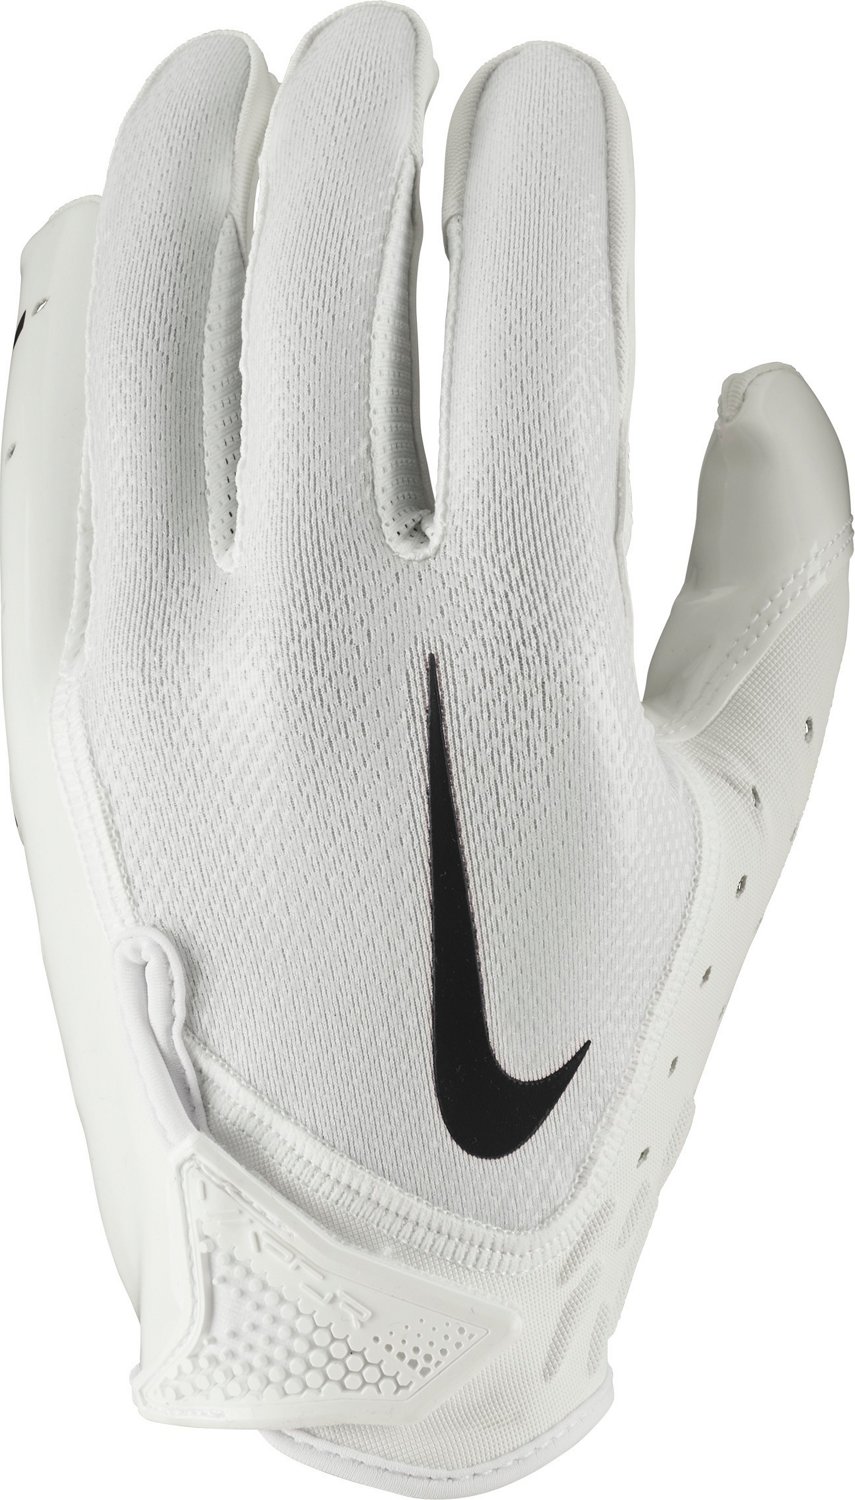 Nike Adults' Vapor Jet 7.0 Football Gloves | Academy